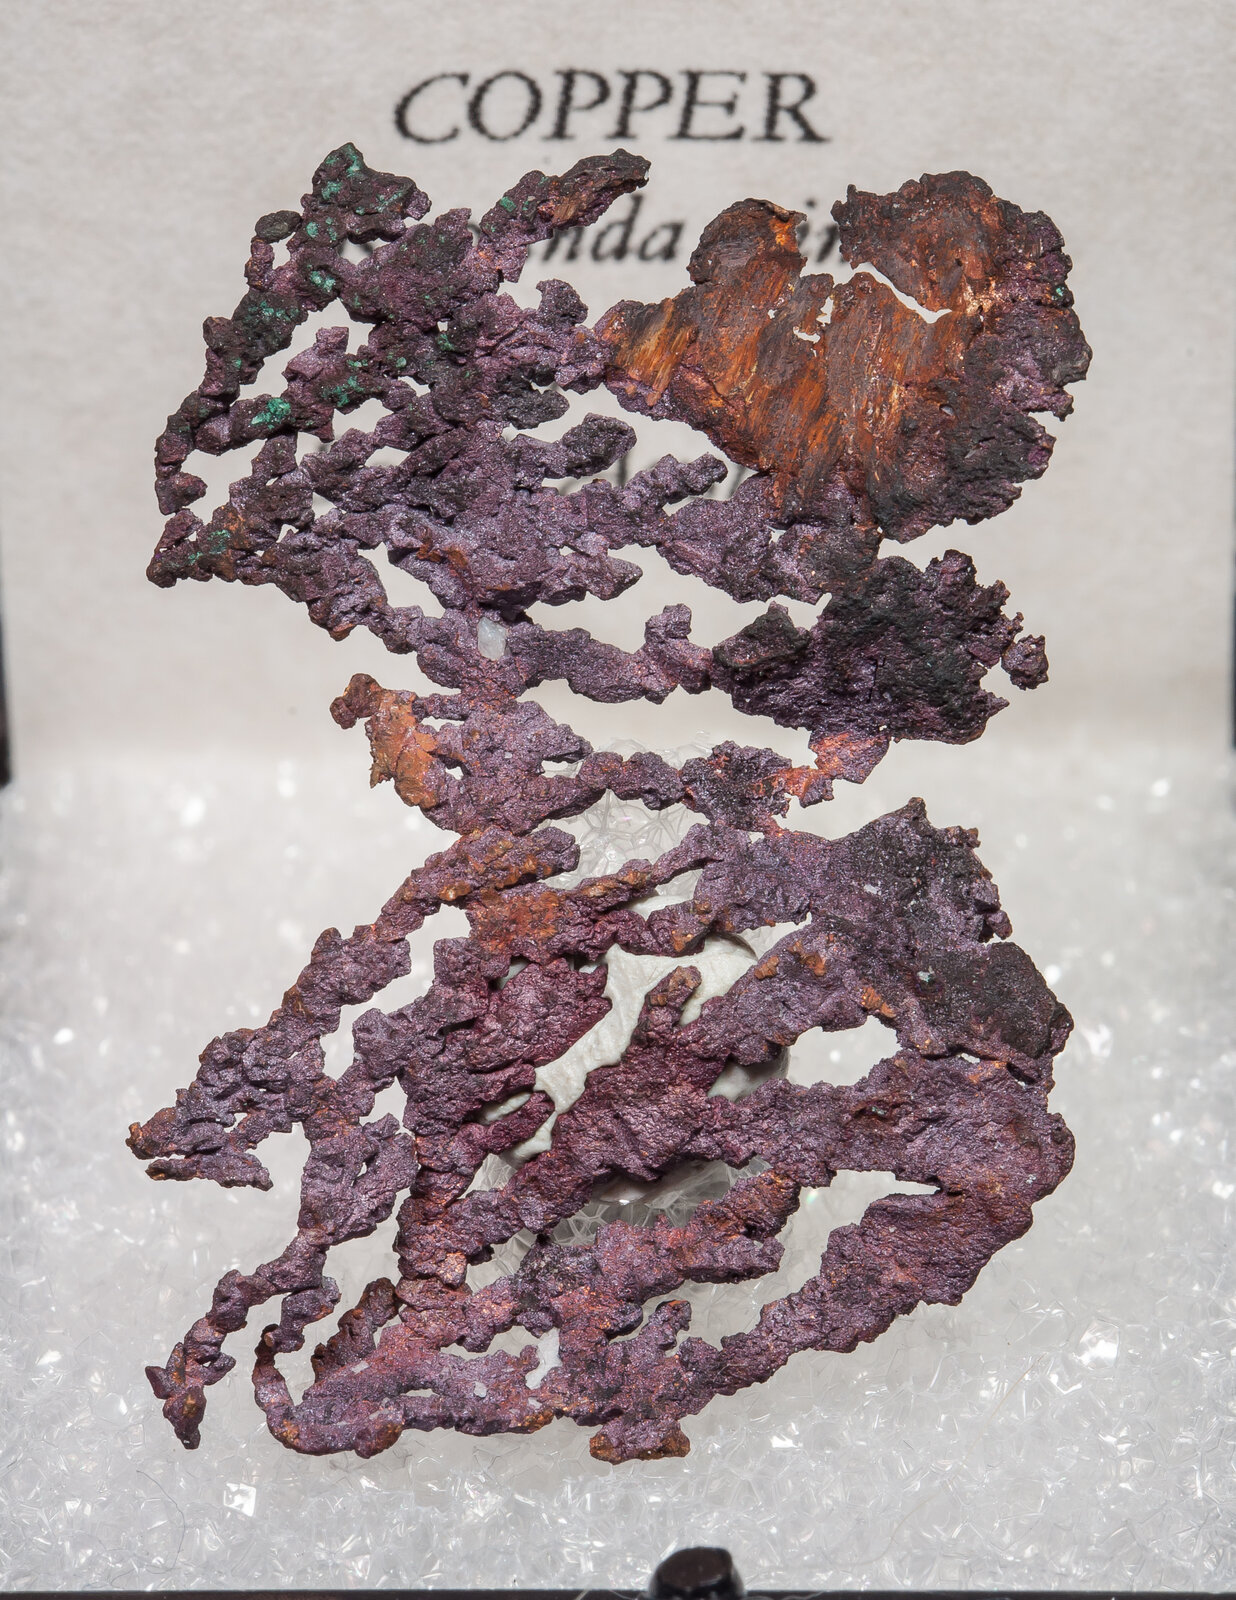 specimens/s_imagesAM6/Copper-MJ13AM6f2.jpg